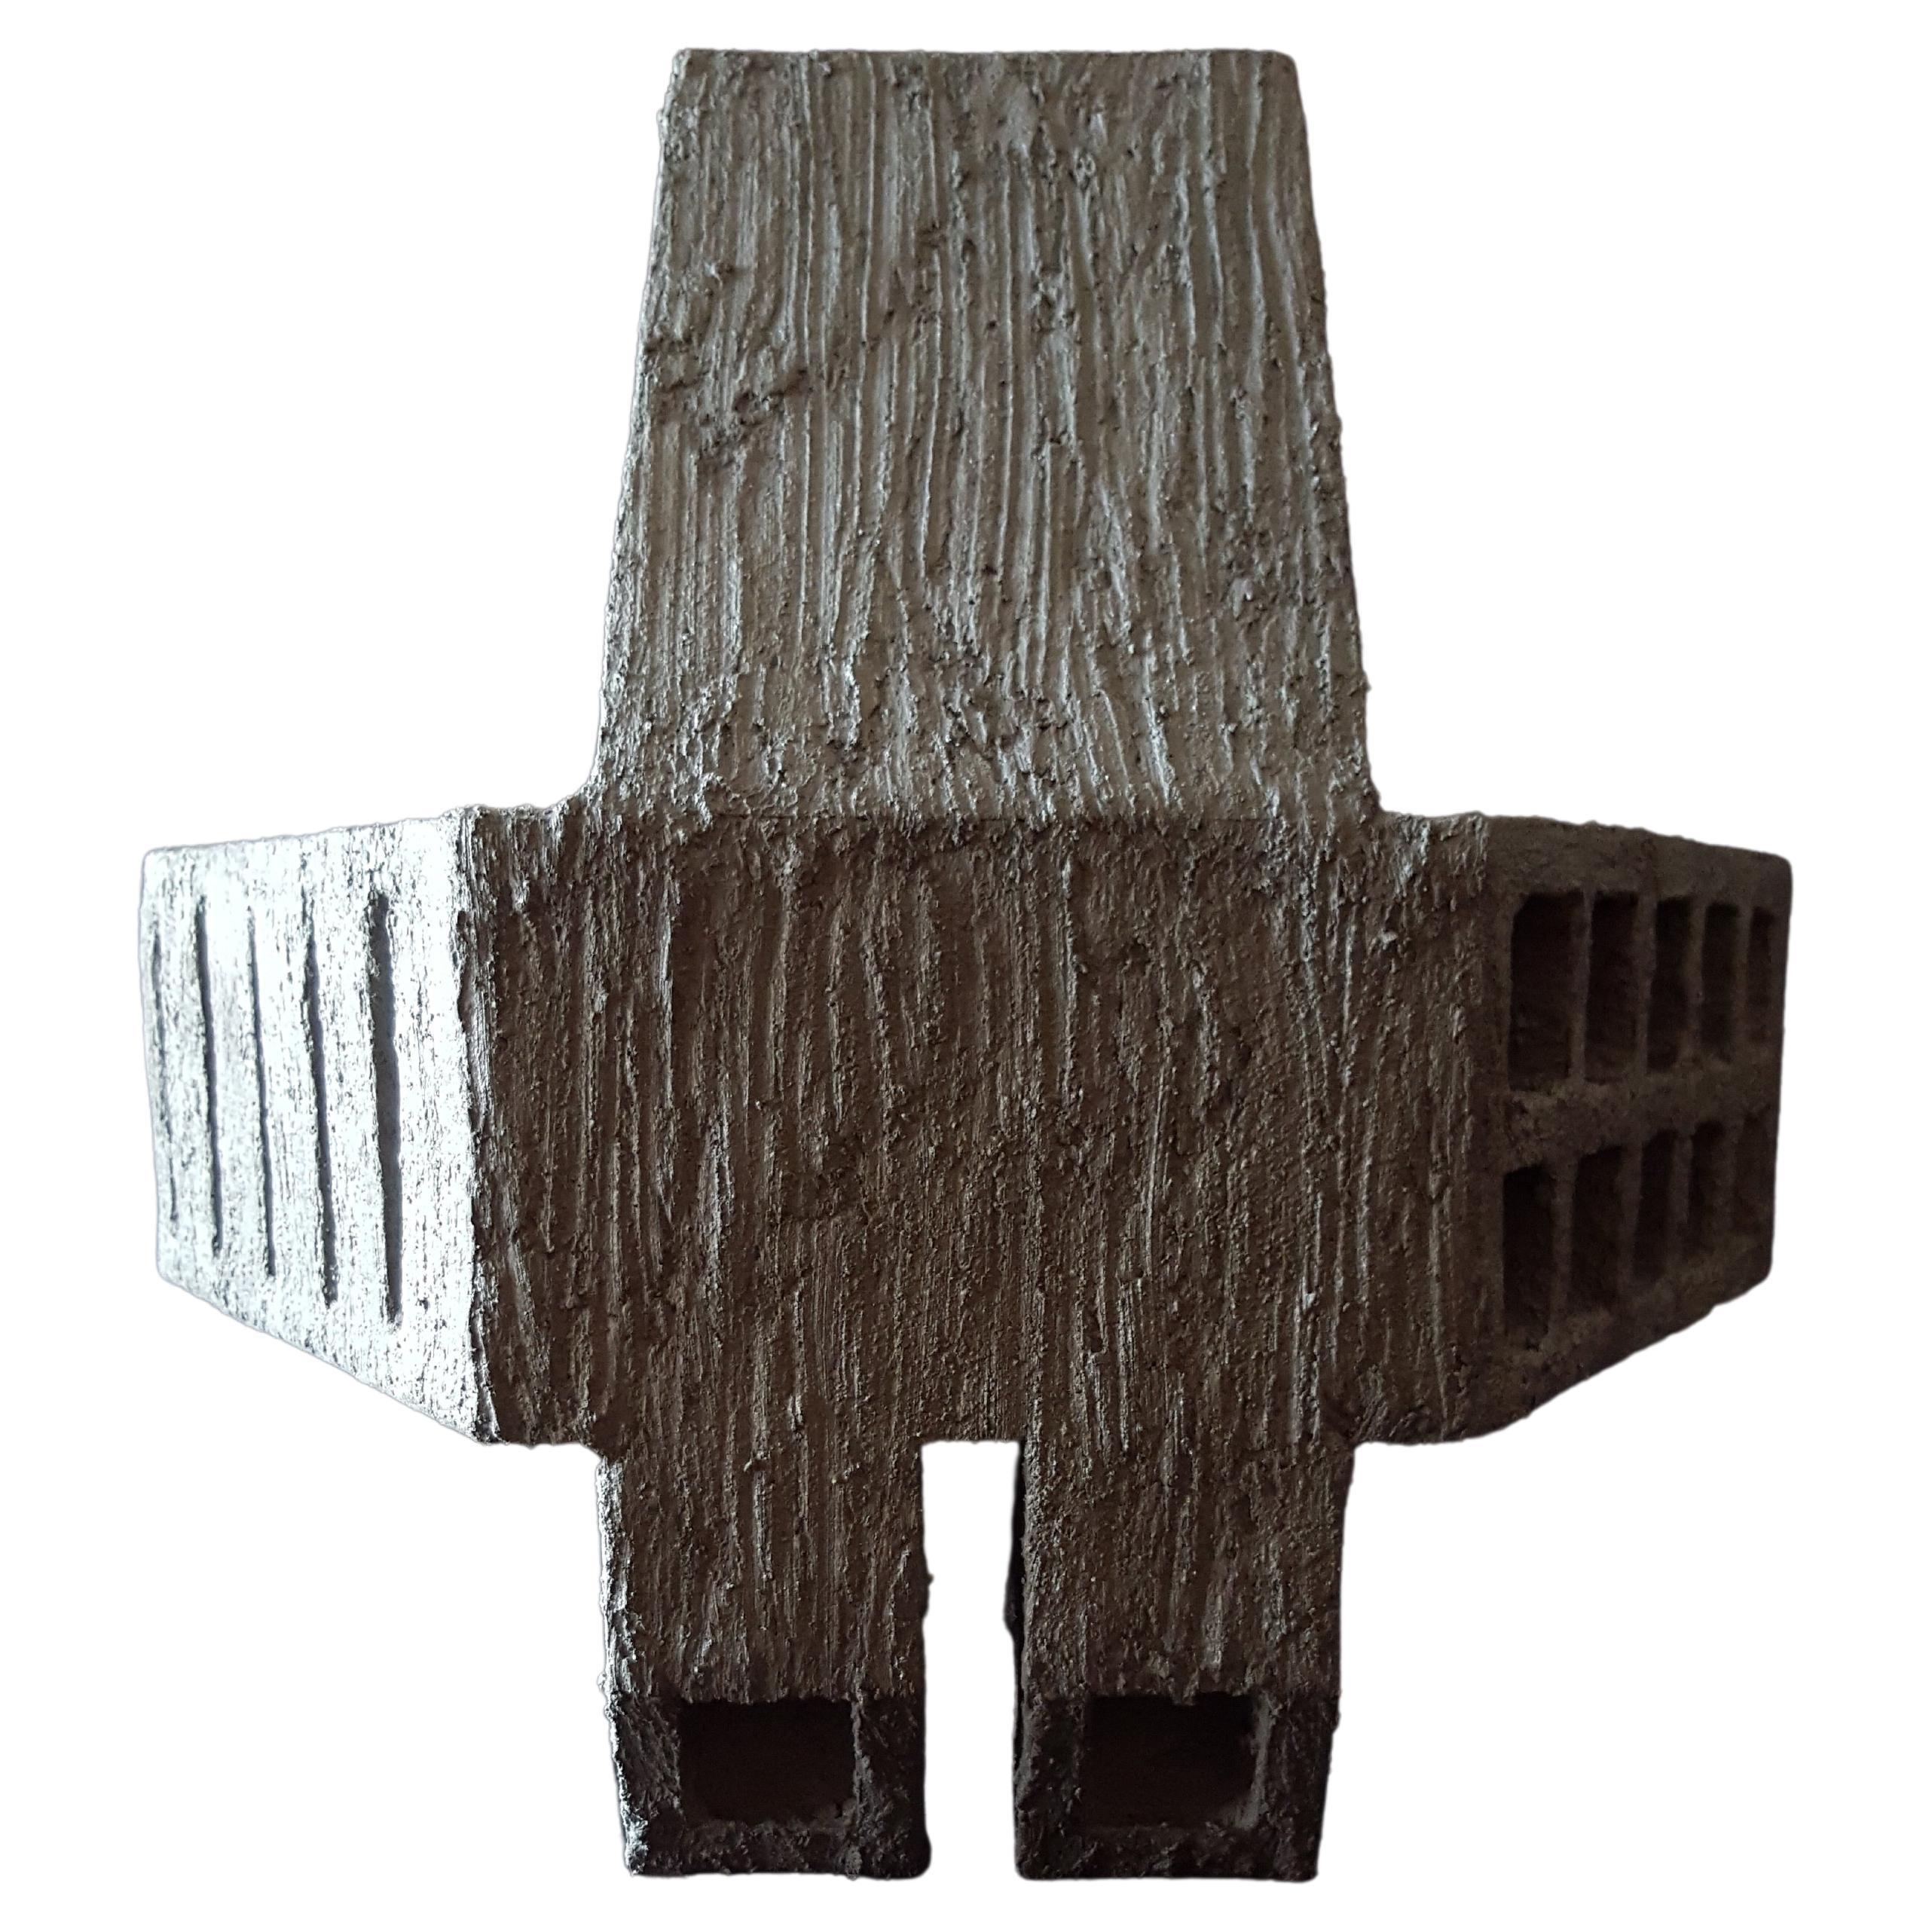 Sculpture Contemporary Geometric Constructivist Wood Concrete Grey - The Dragon For Sale